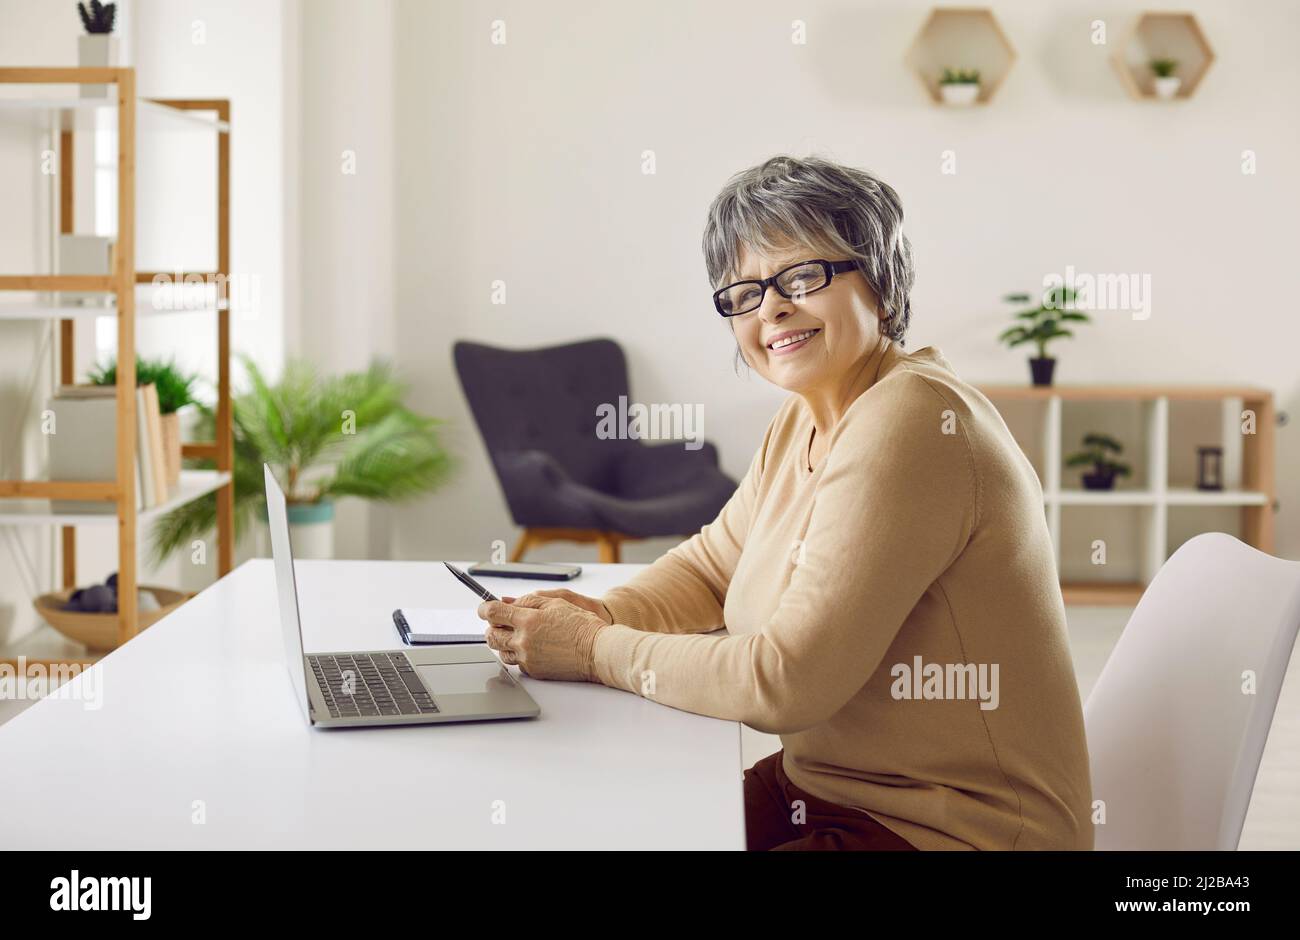 Joyful smiling confident senior woman using laptop computer sitting at workplace desk. Stock Photo